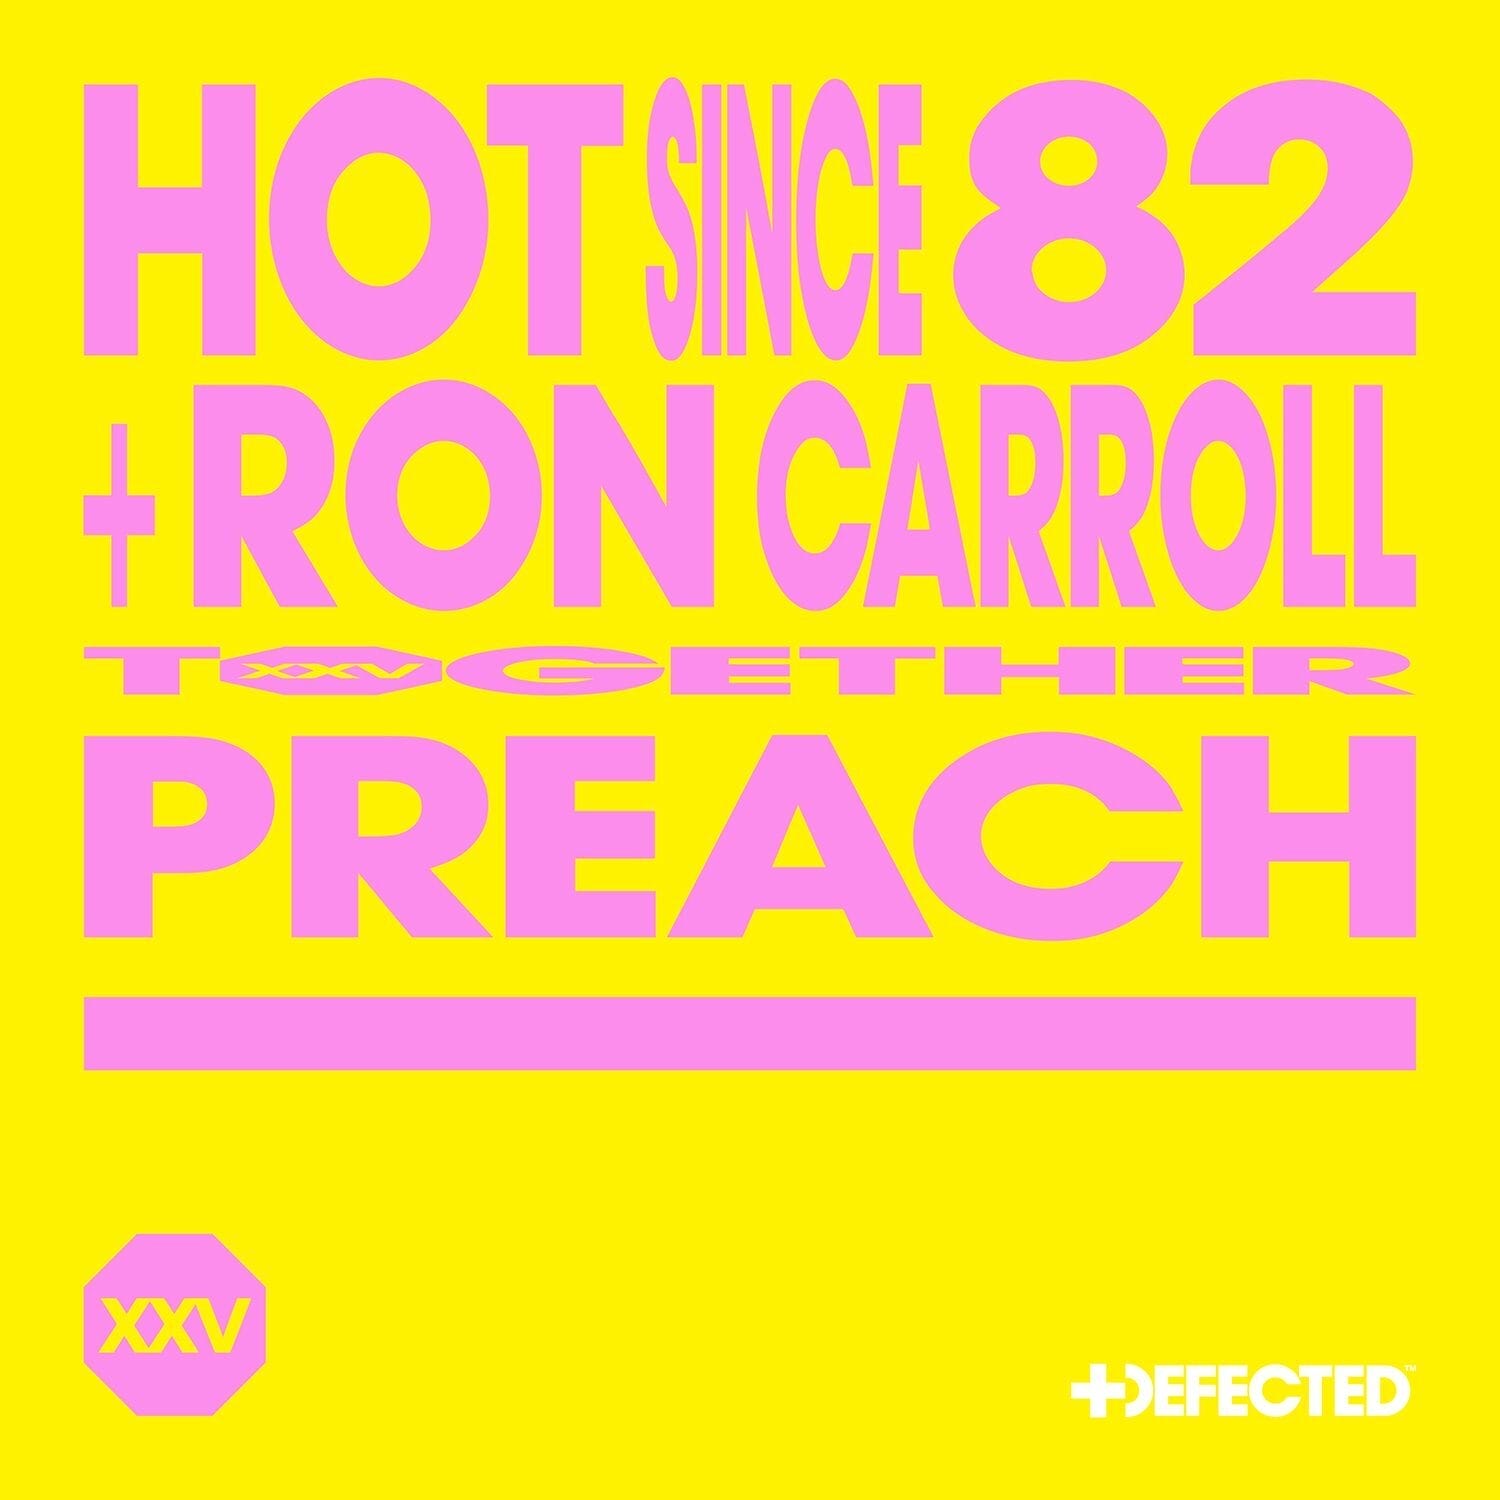 Hot Since 82 Featuring Ron Carroll ‘Preach’